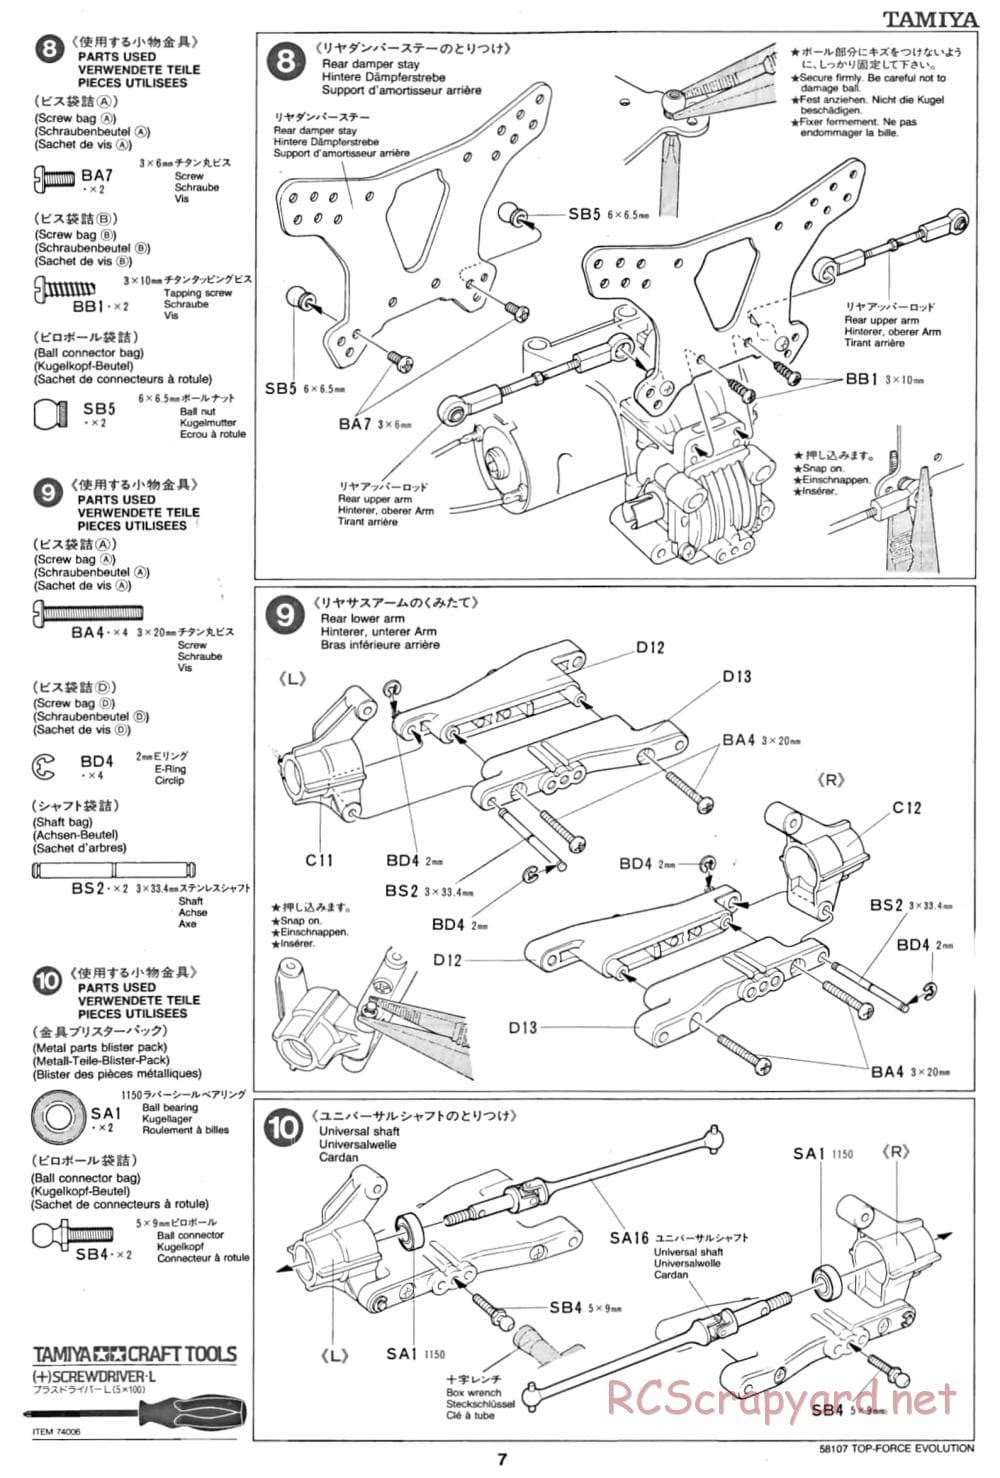 Tamiya - Top Force Evolution Chassis - Manual - Page 7